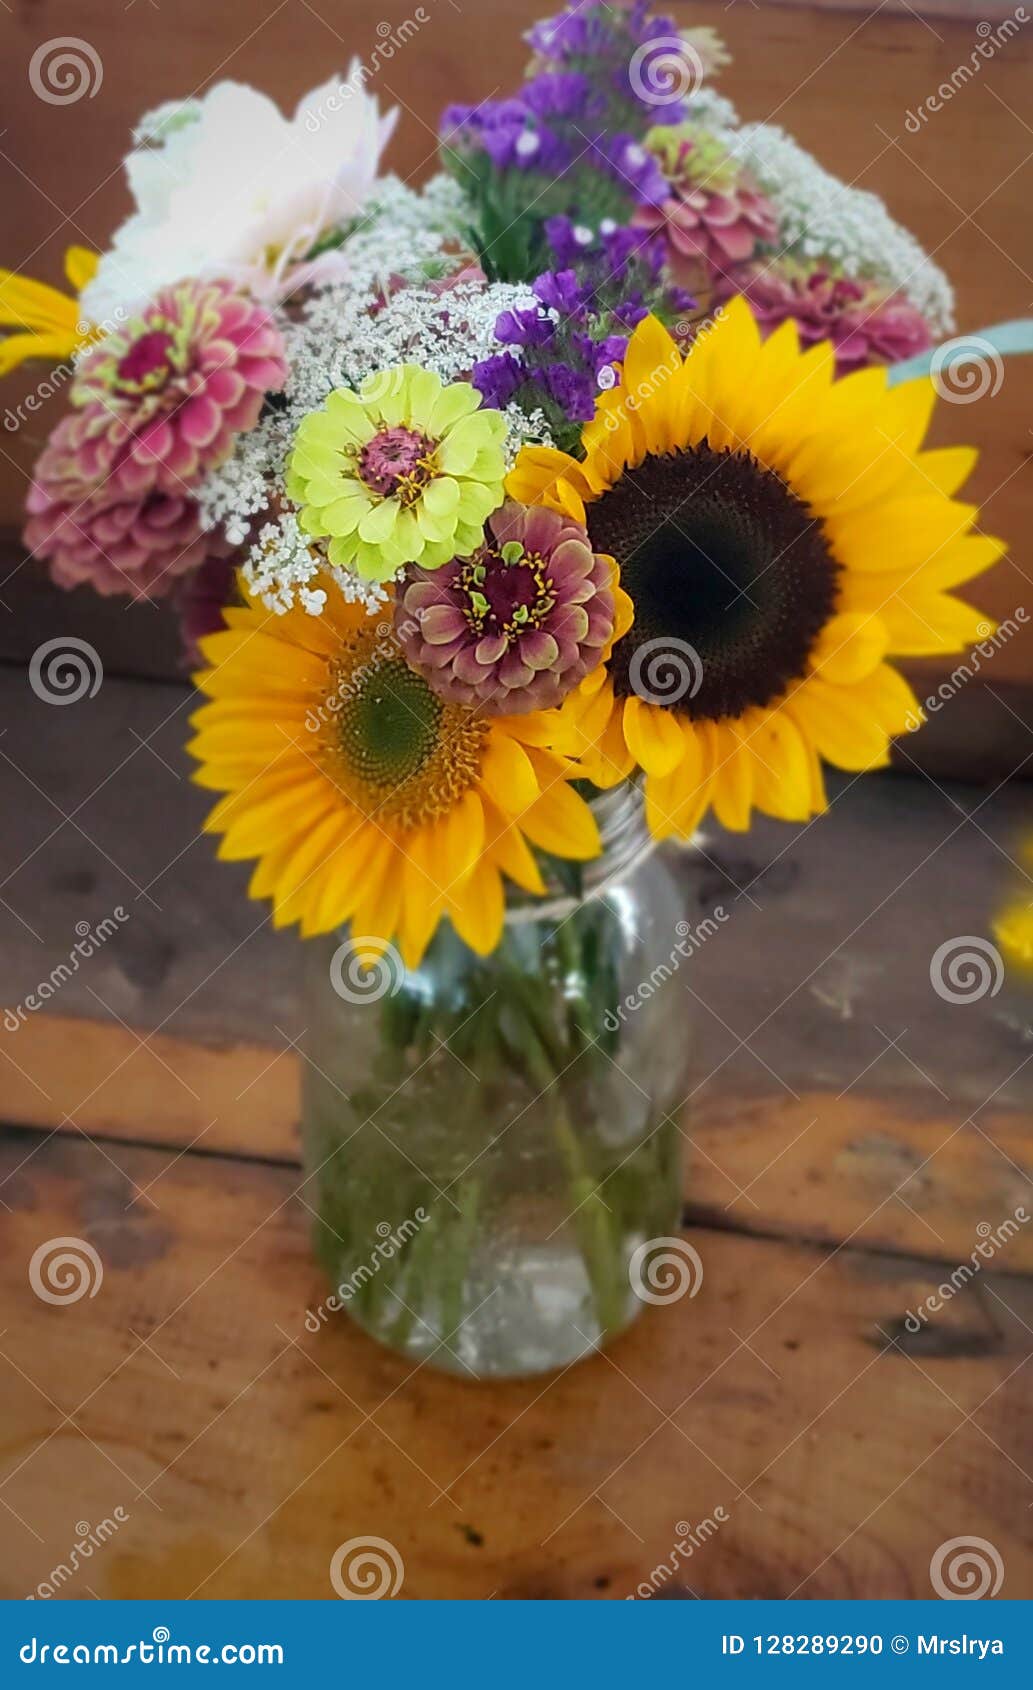 Autumn Flower Bouquet In Mason Jar Vase Stock Photo Image Of Colorful Purple 128289290